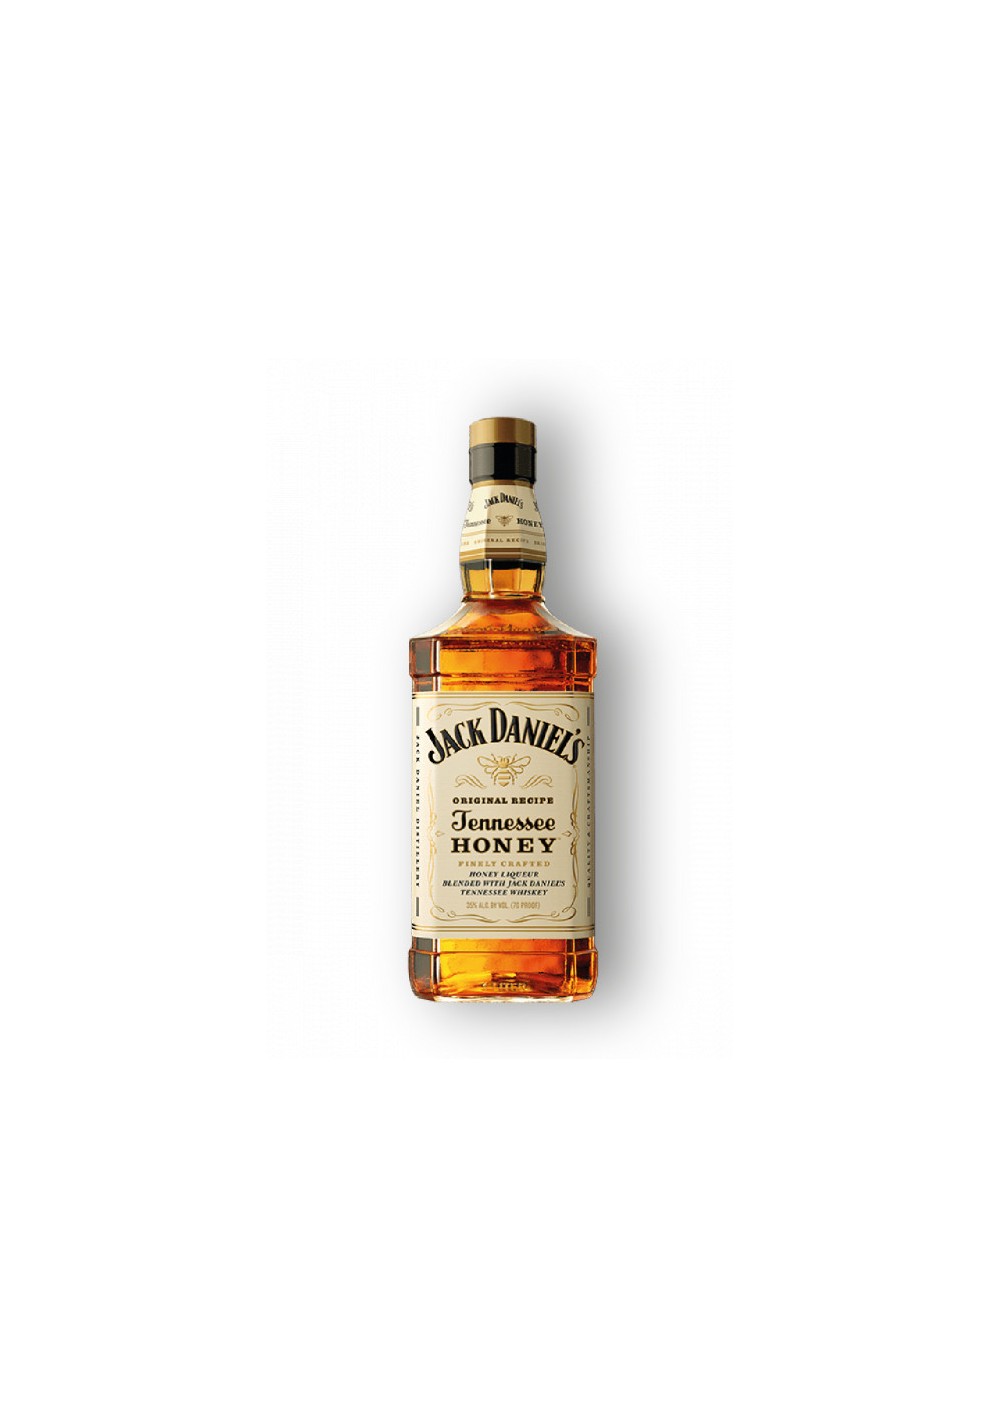 Jack Daniel's Tennessee Honey (70cl)